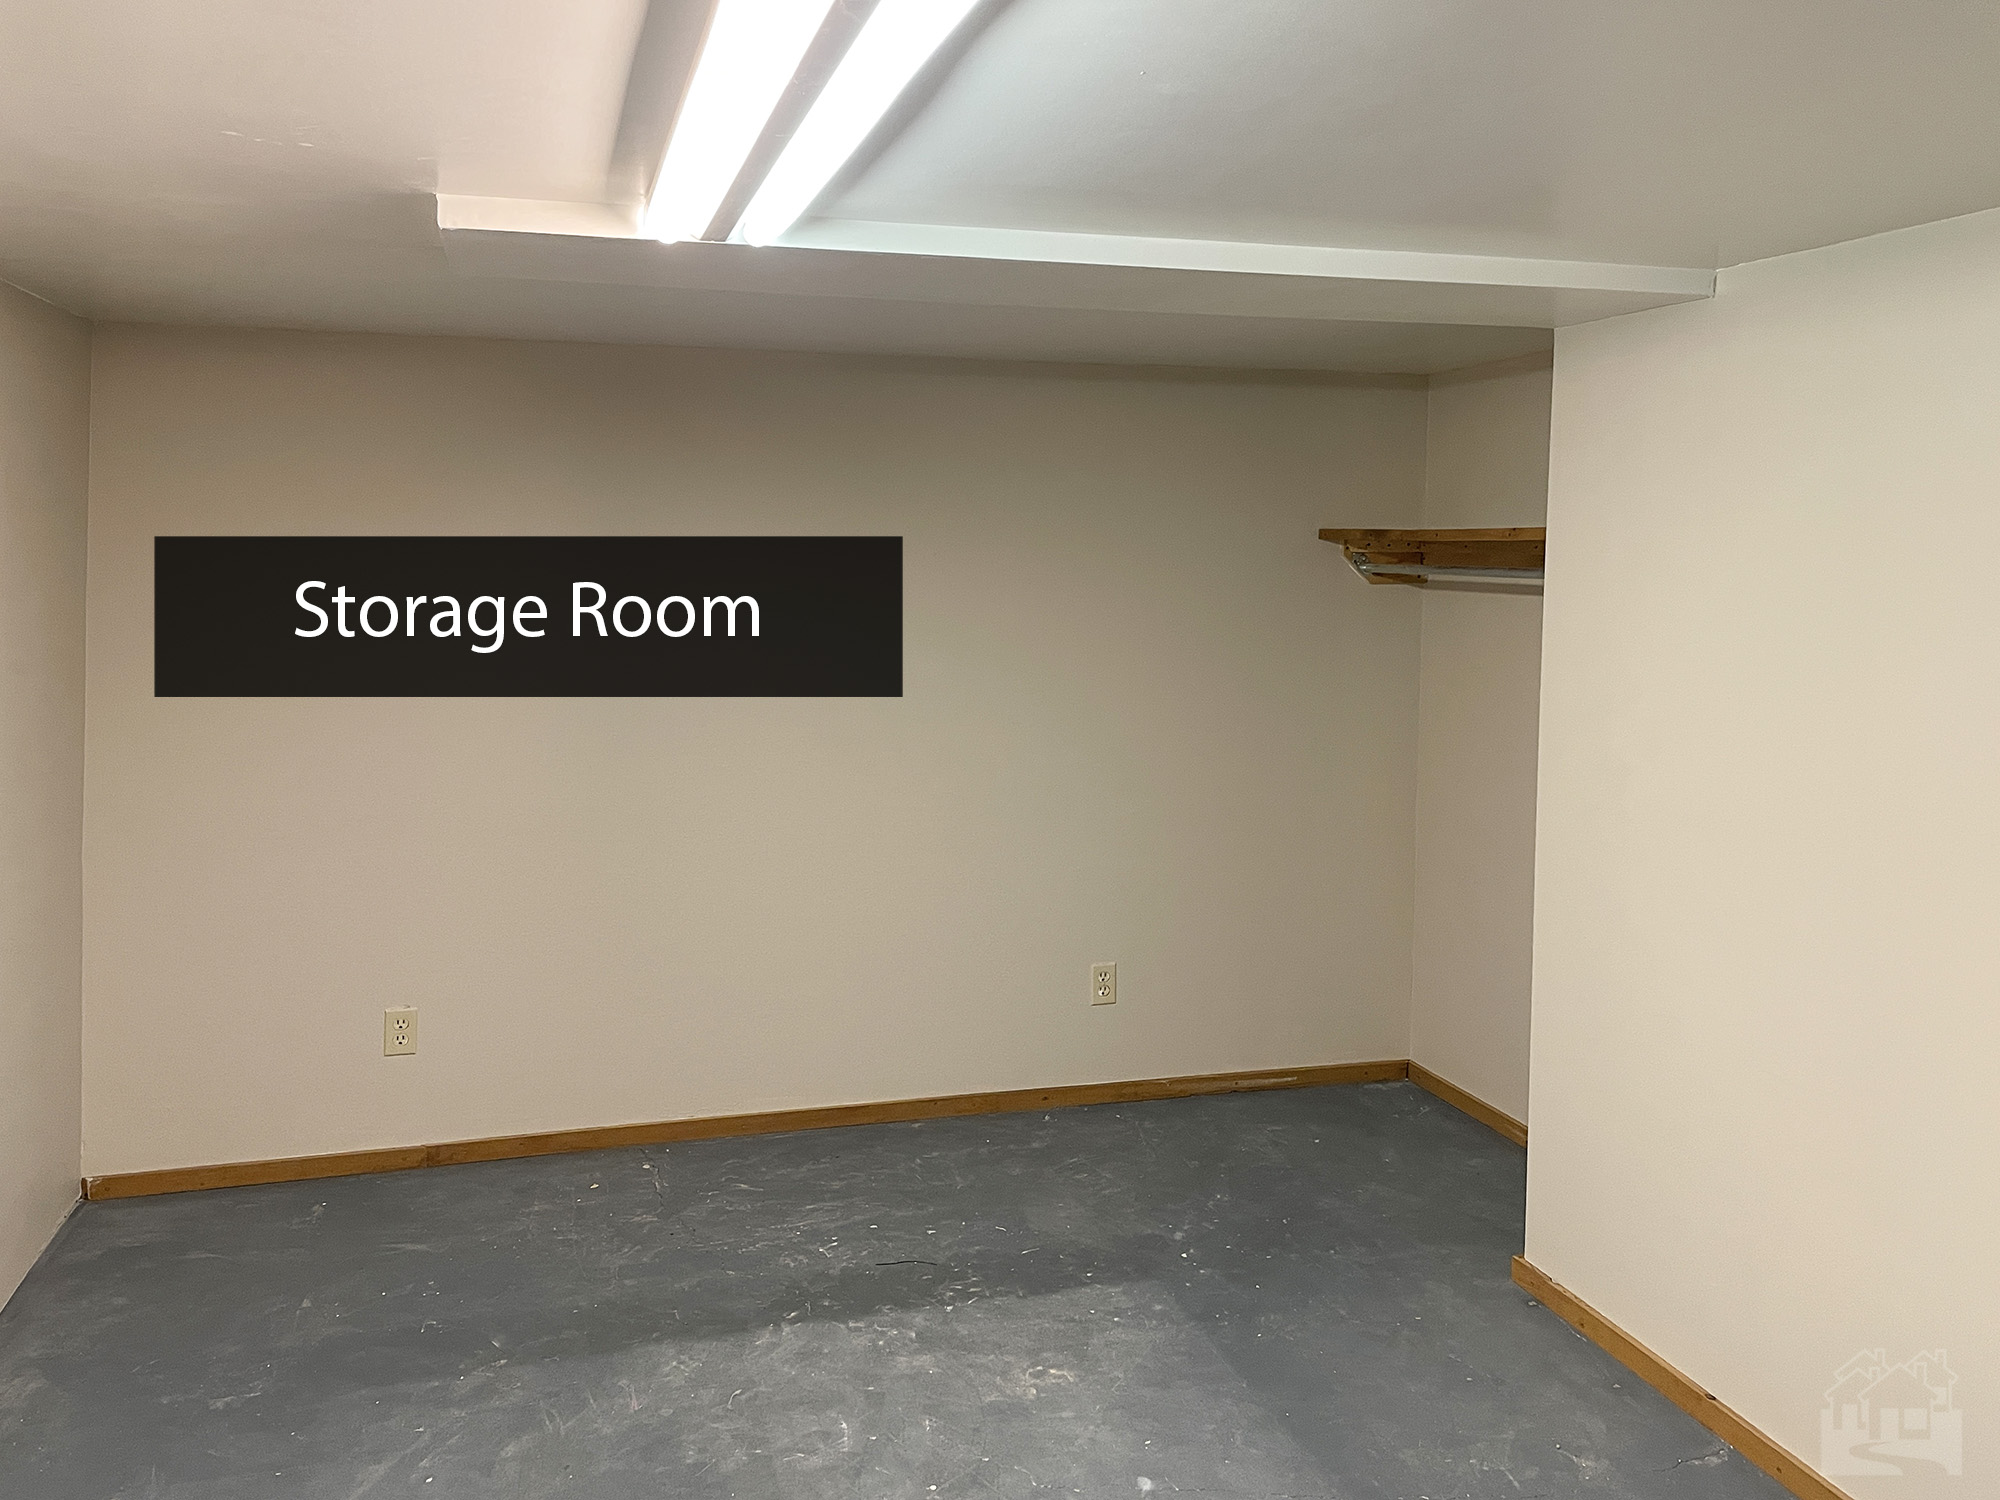 Storage Room Key Image